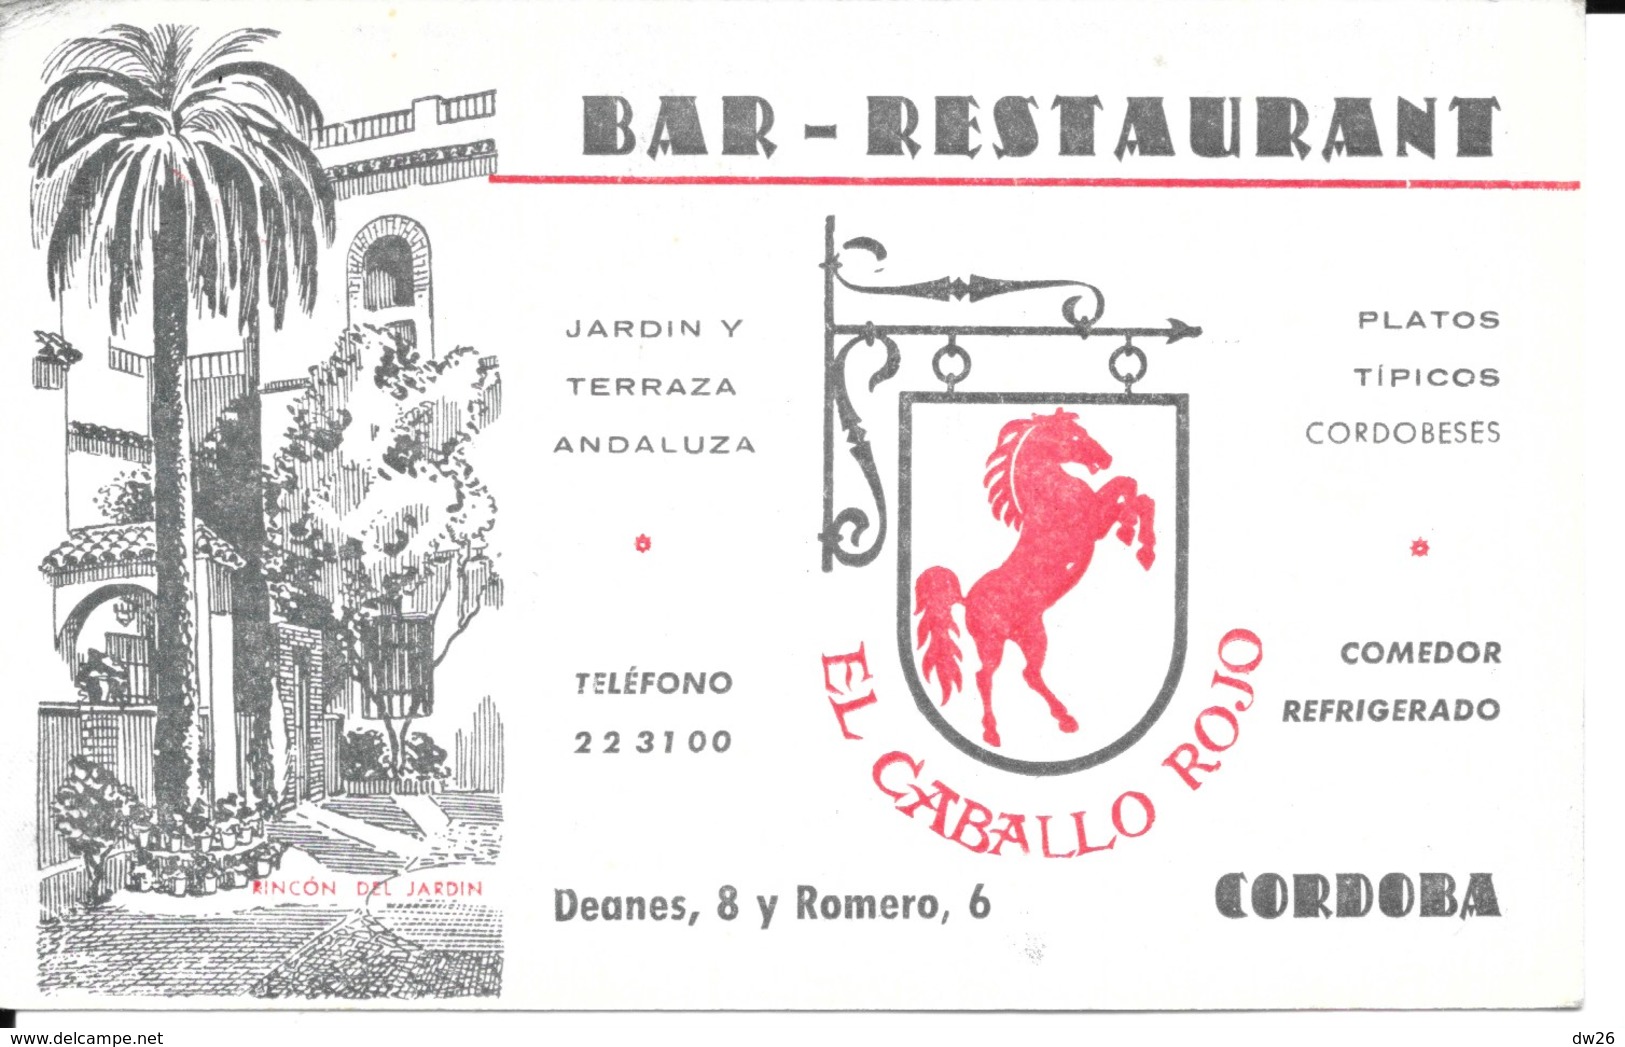 Carte De Visite Publicitaire - Bar-Restaurant El Caballo Rojo, Cordoba (Jardin Y Terraza Andaluza) - Visiting Cards